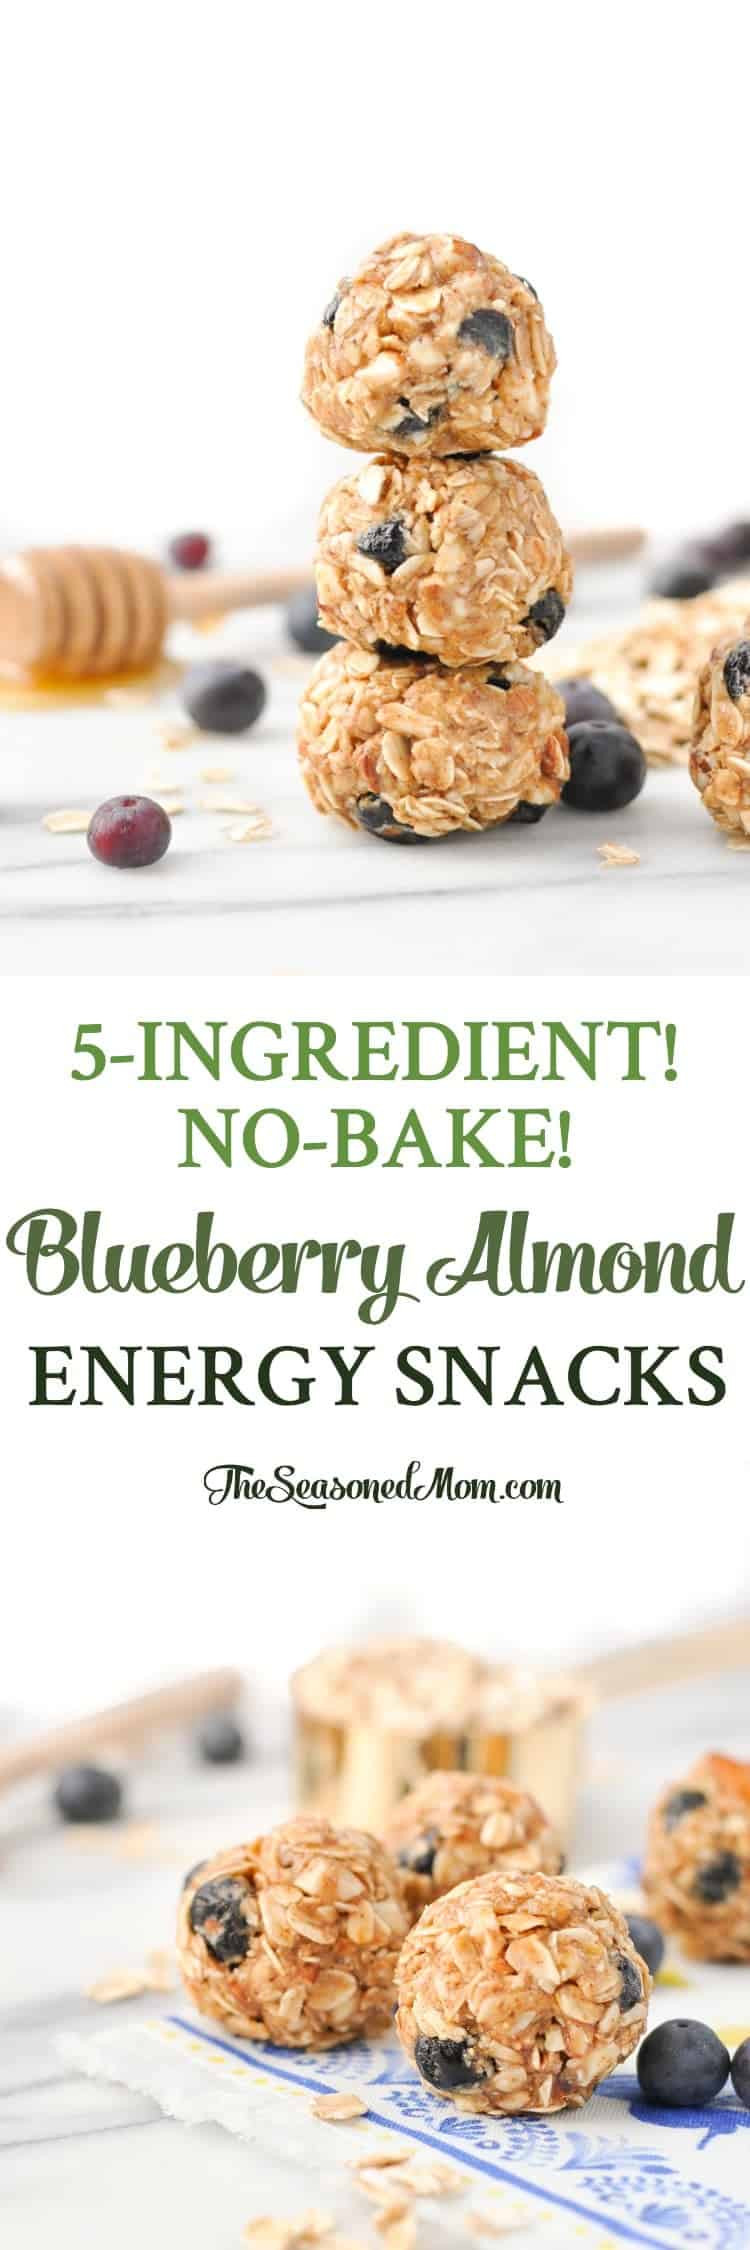 Healthy Energy Snacks
 No Bake Blueberry Almond Energy Snacks The Seasoned Mom